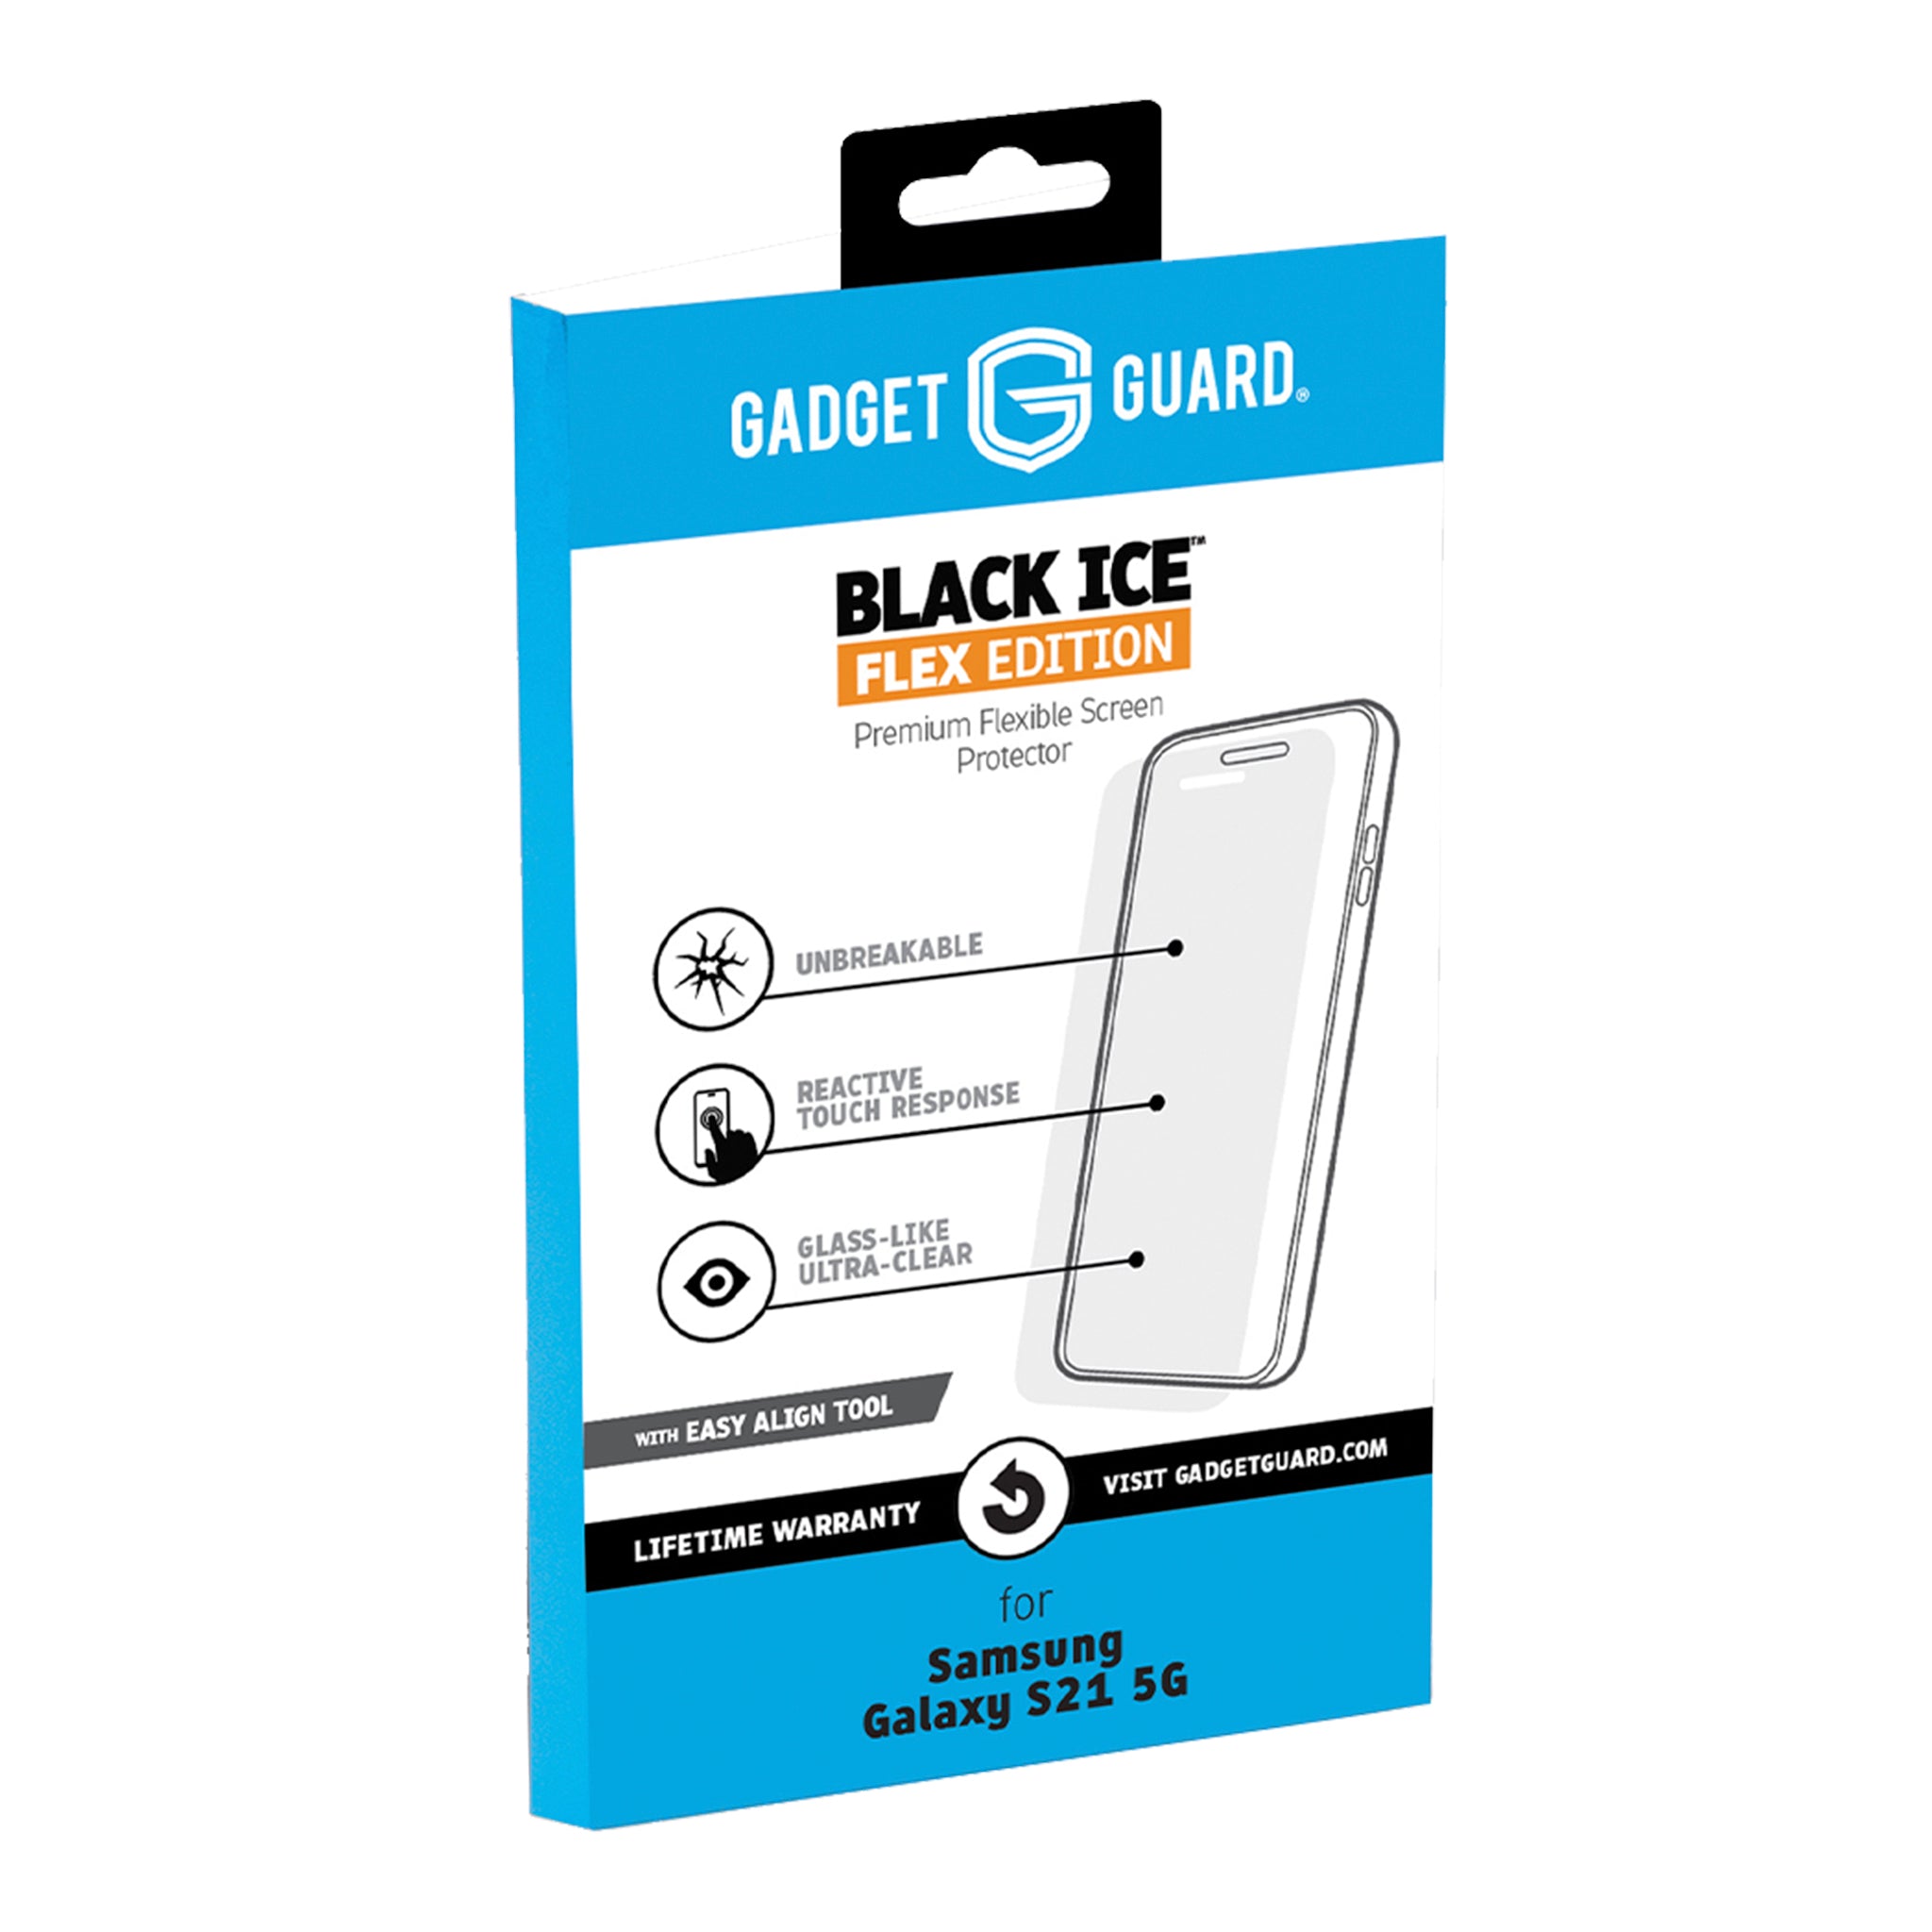 Gadget Guard - Black Ice Flex Screen Protector For Samsung Galaxy S21 5g - Clear